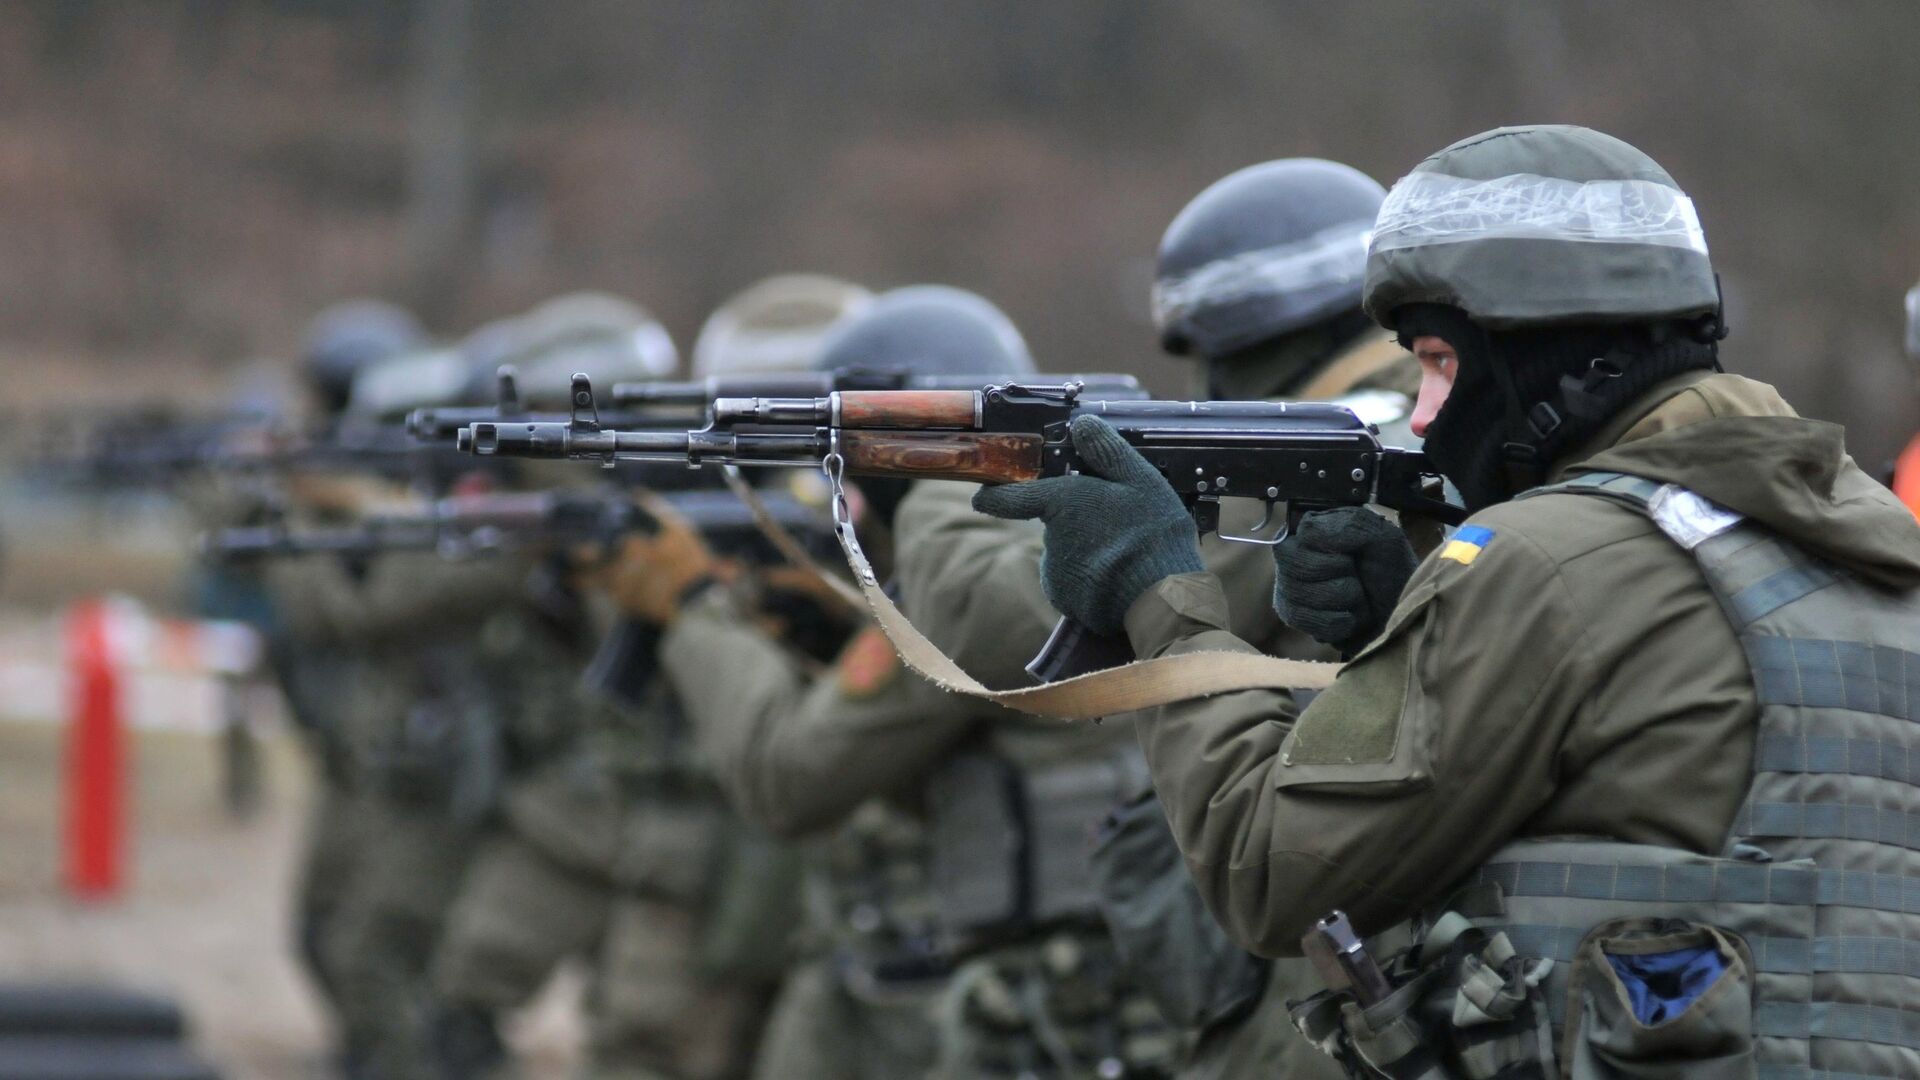 Ukraine's National Guard soldiers undergo NATO combat training - Sputnik International, 1920, 07.03.2022